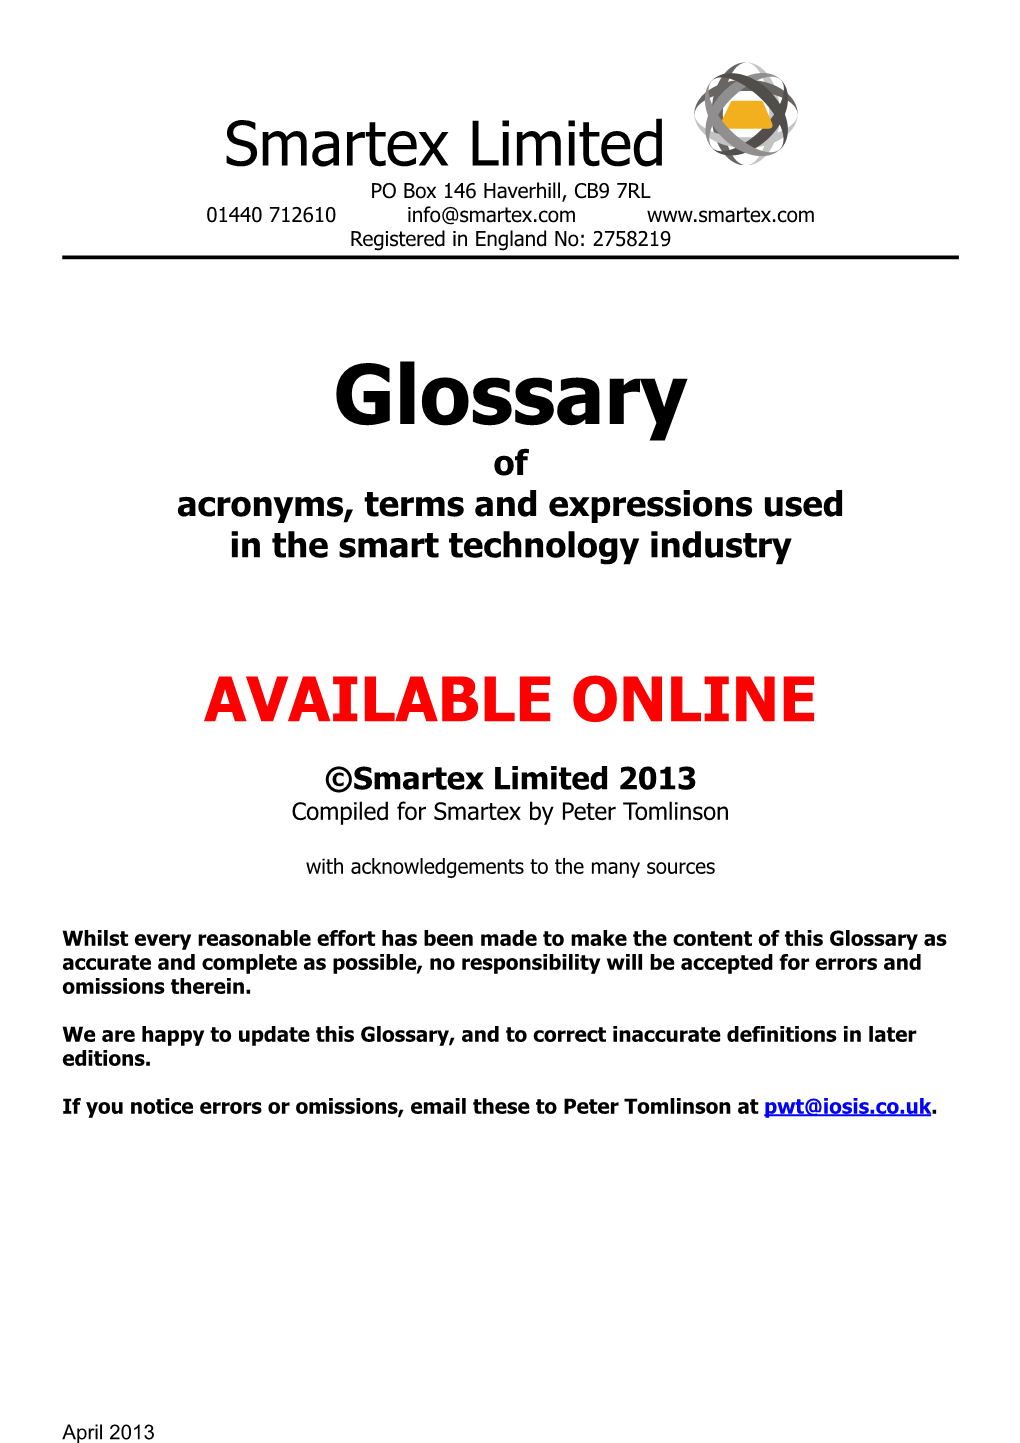 Smartex Glossary